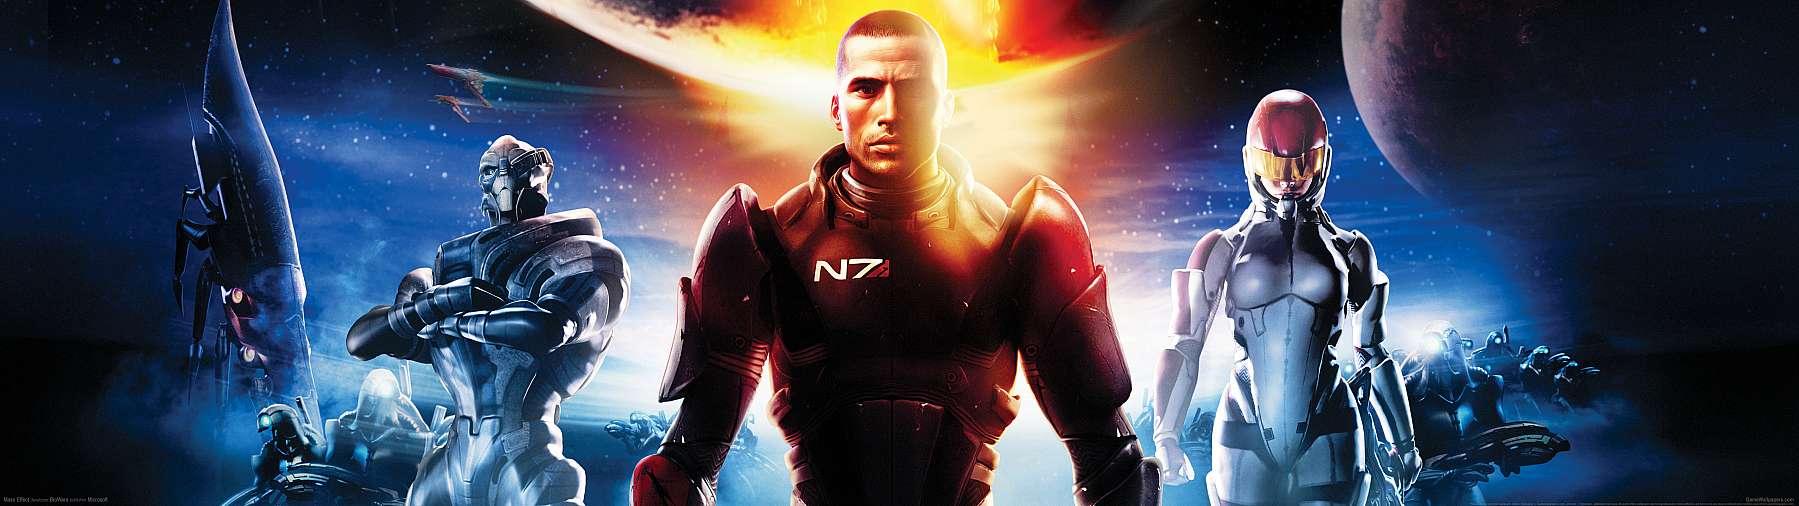 Mass Effect superwide achtergrond 04